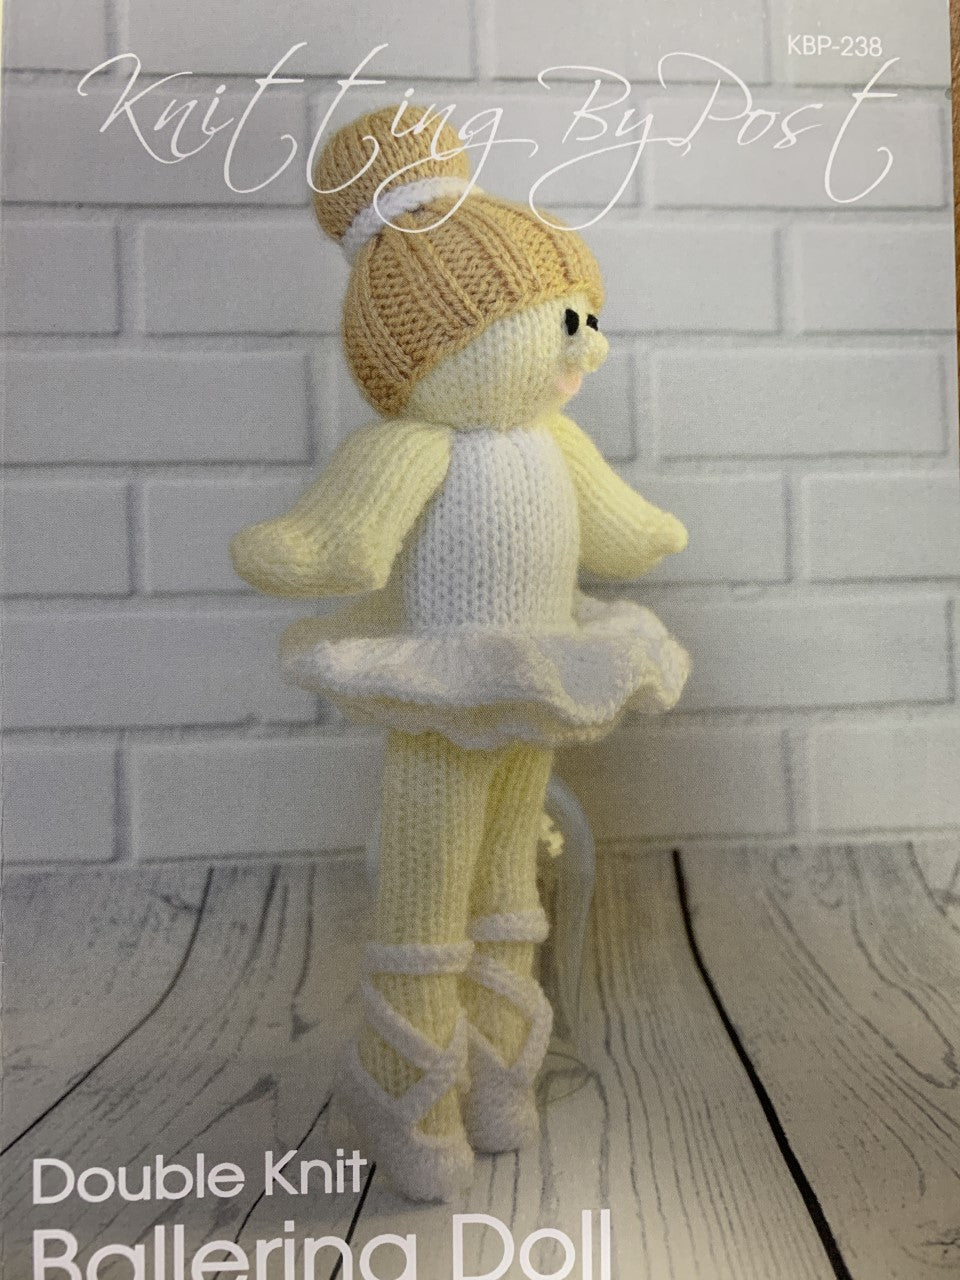 KBP-238 Ballerina Doll soft toy in DK knitting pattern